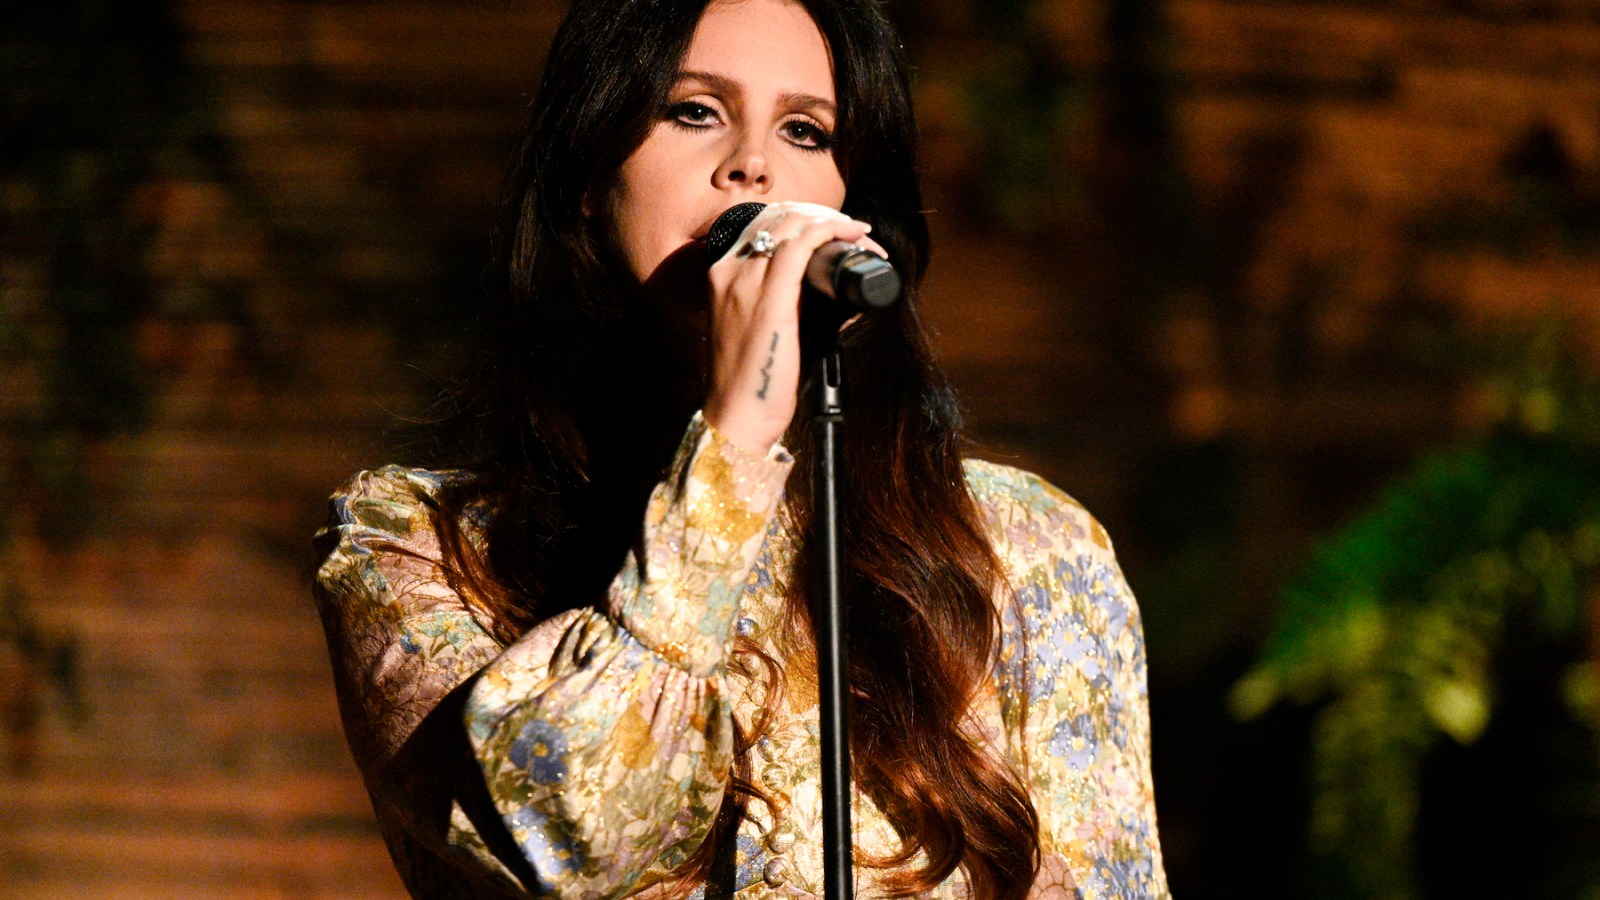 Lana Del Rey Performs Stunning Headlining Set at Coachella New York